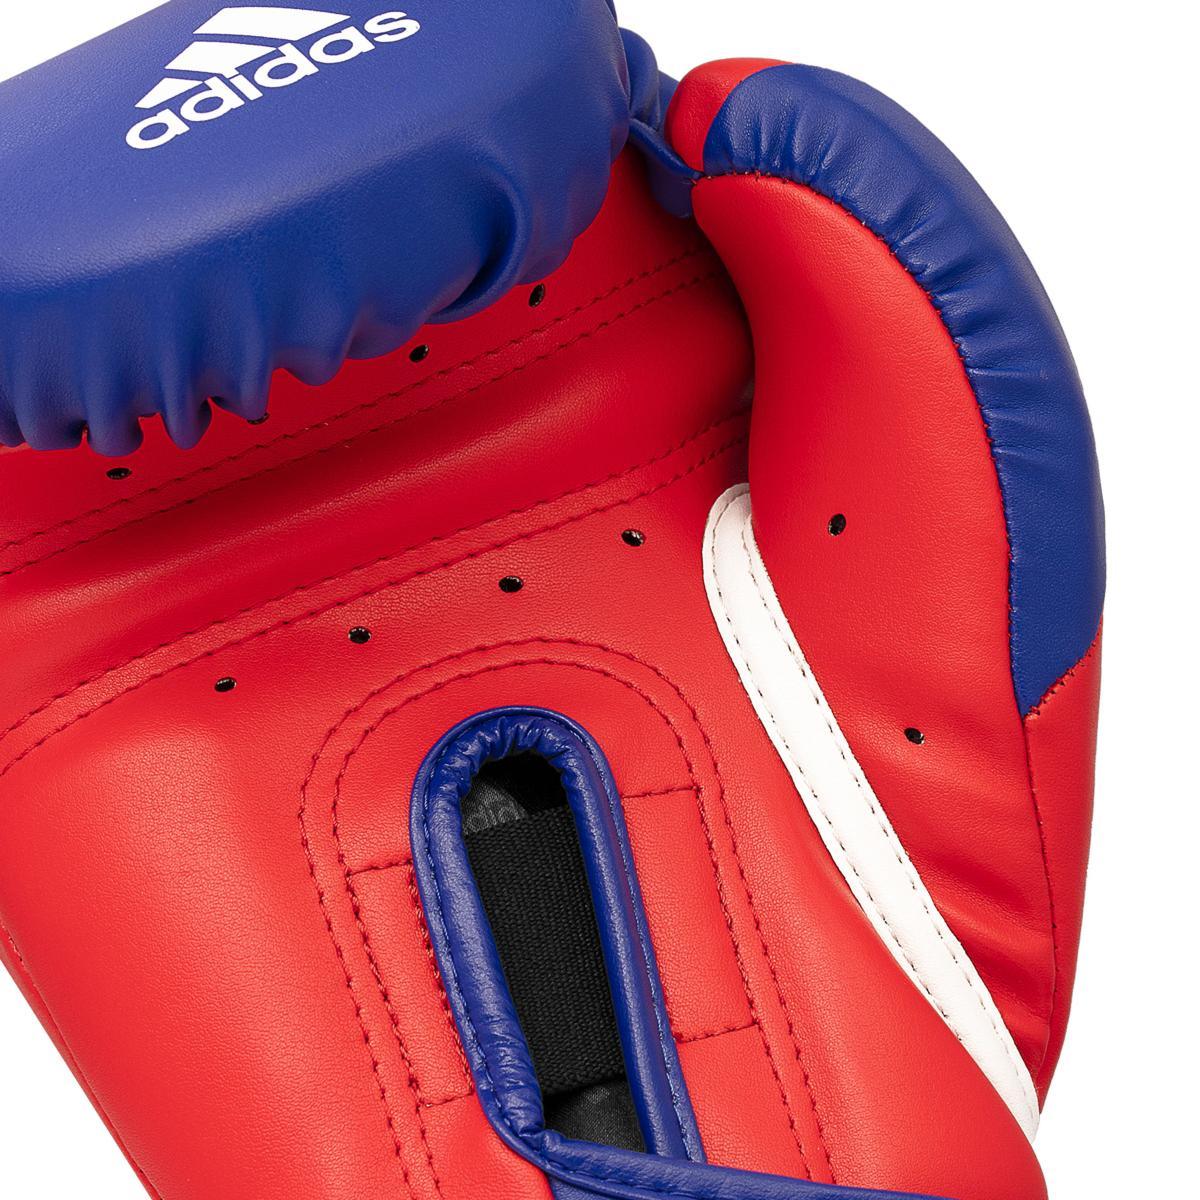 gants-de-sparring-ffb-adidas-tilt350-velcro-desserto